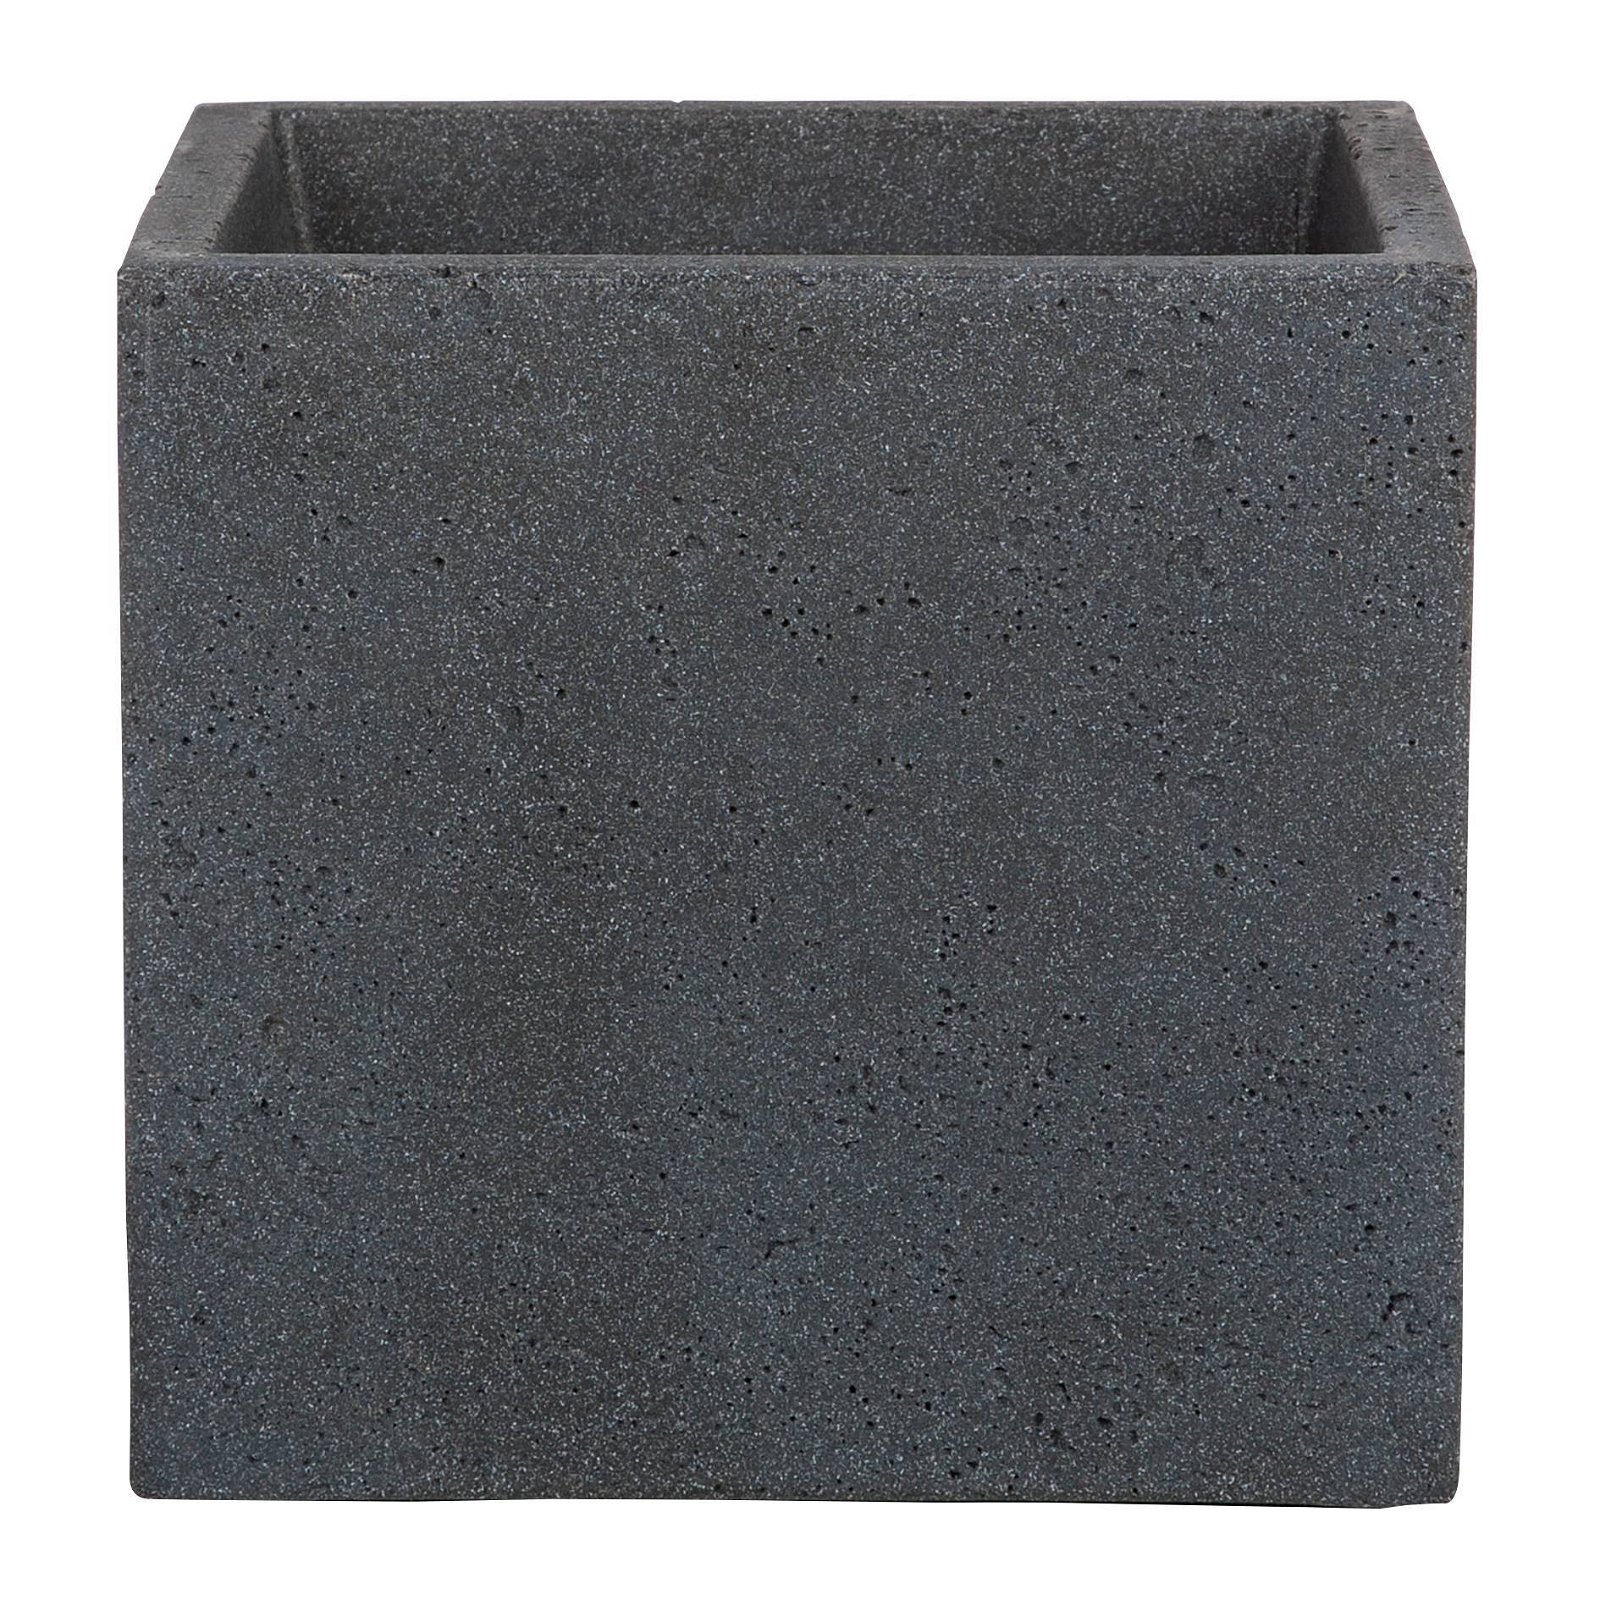 Pflanzkübel 'C-Cube', Stony Black, 29 x 29 x H 27 cm, 18 Liter